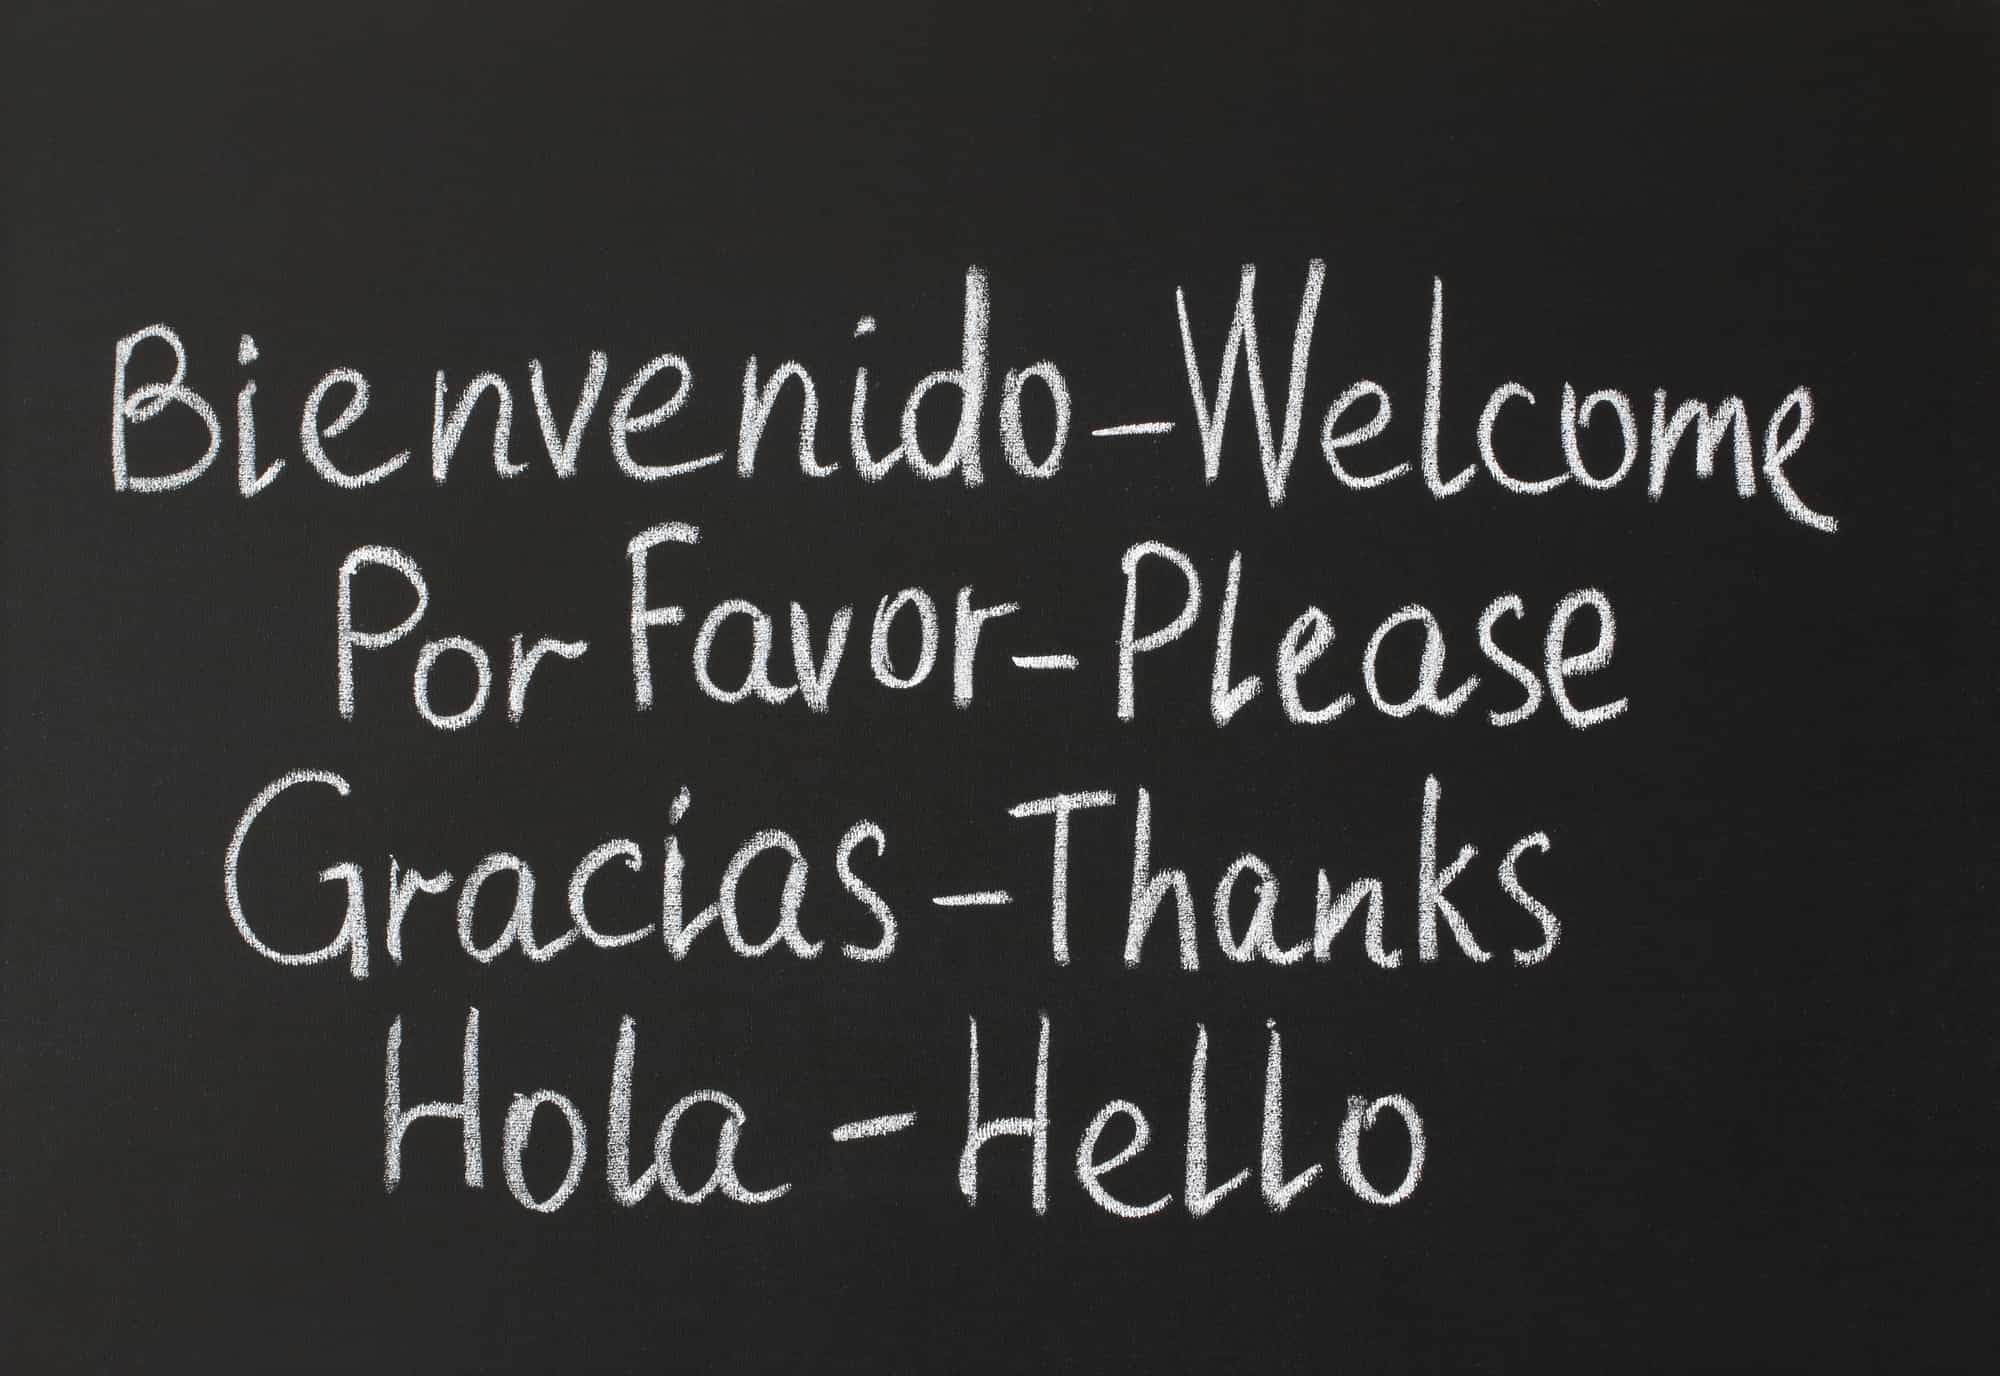 Spanish translations with chalk on a blackboard